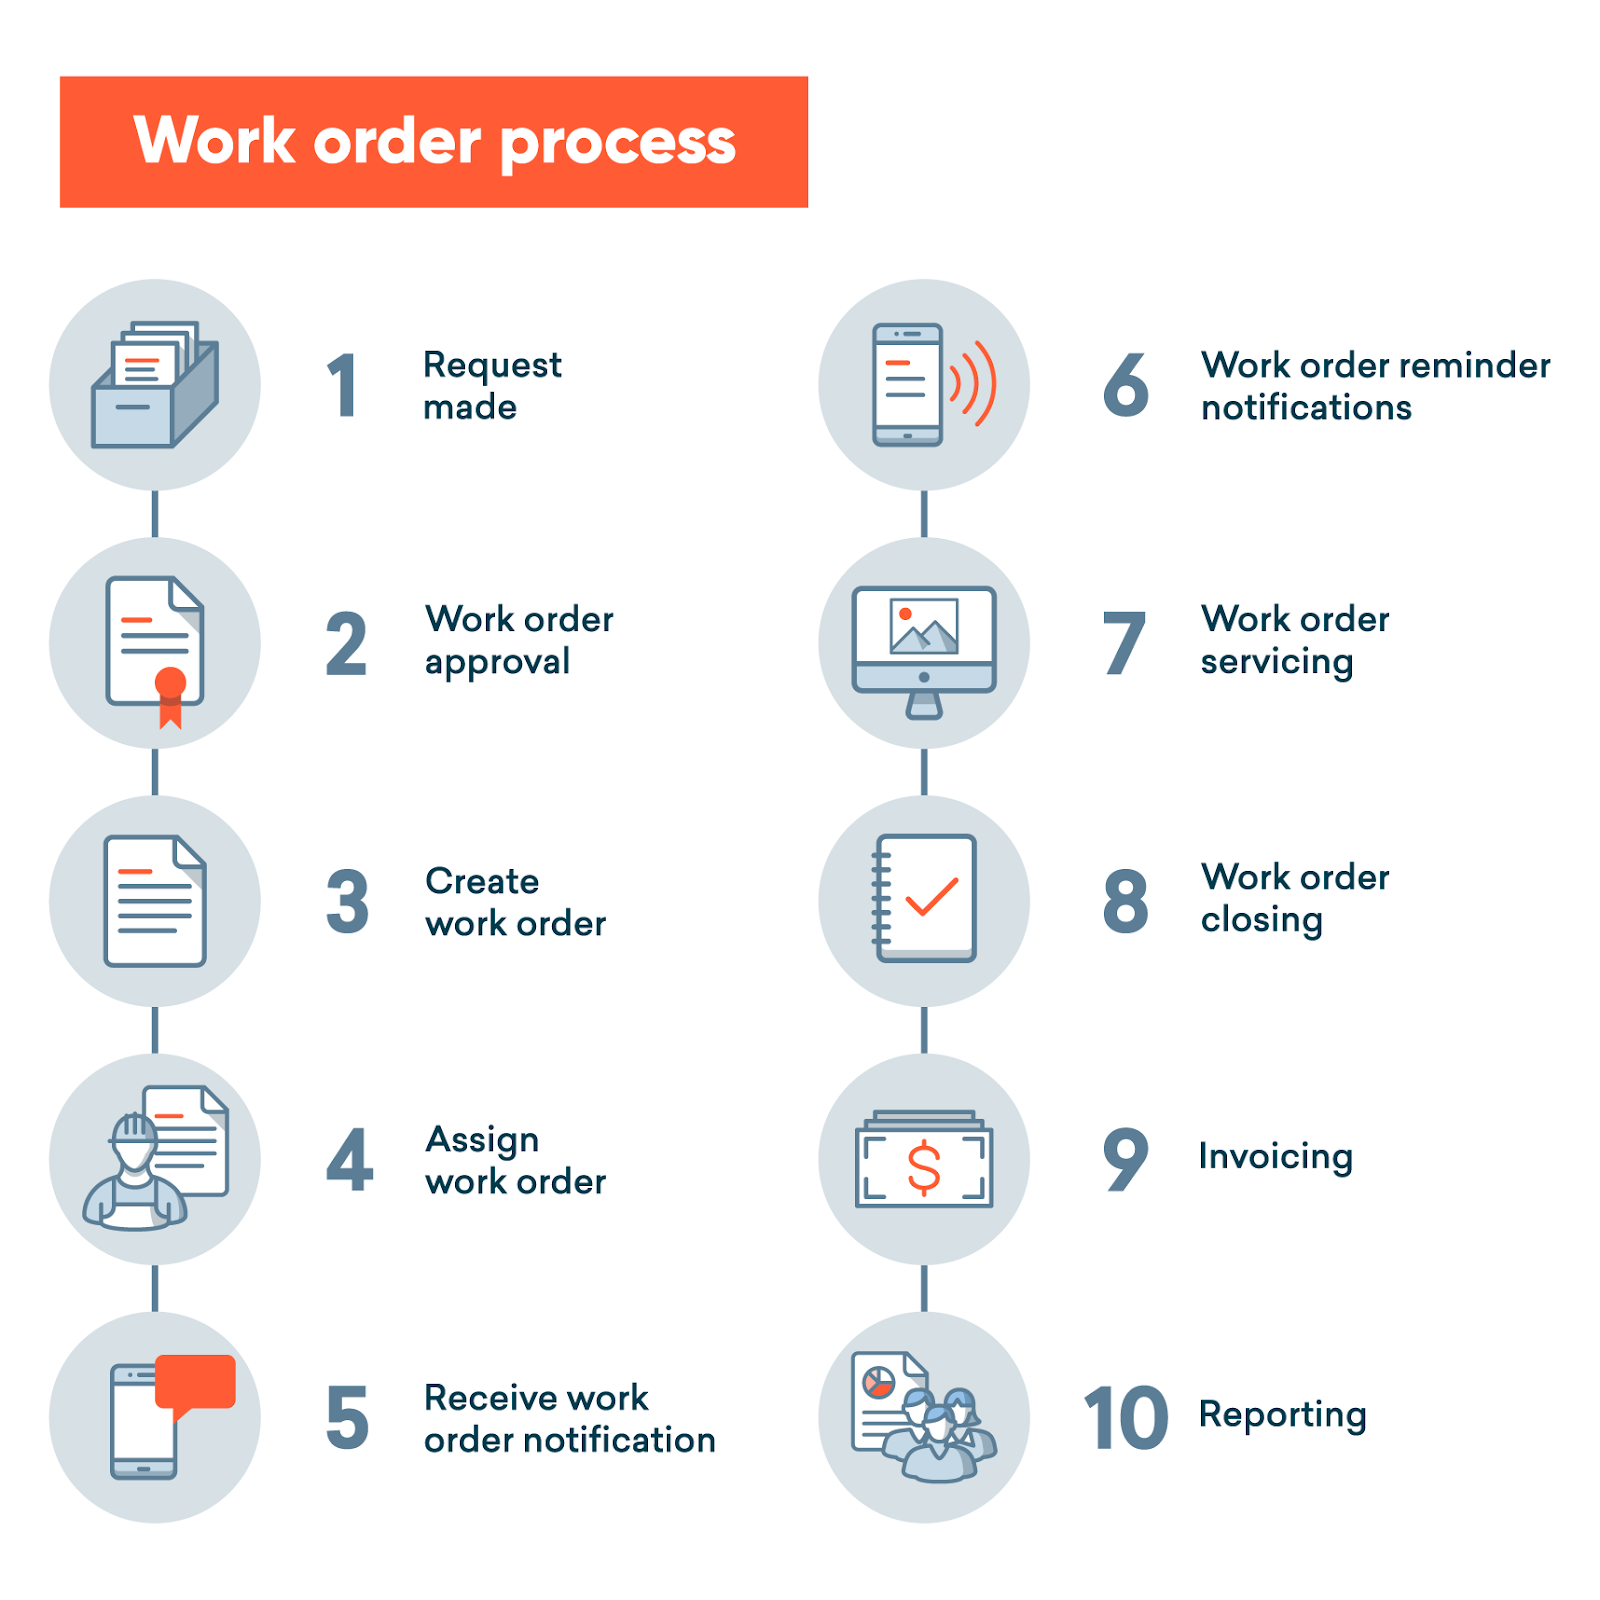 Work order process